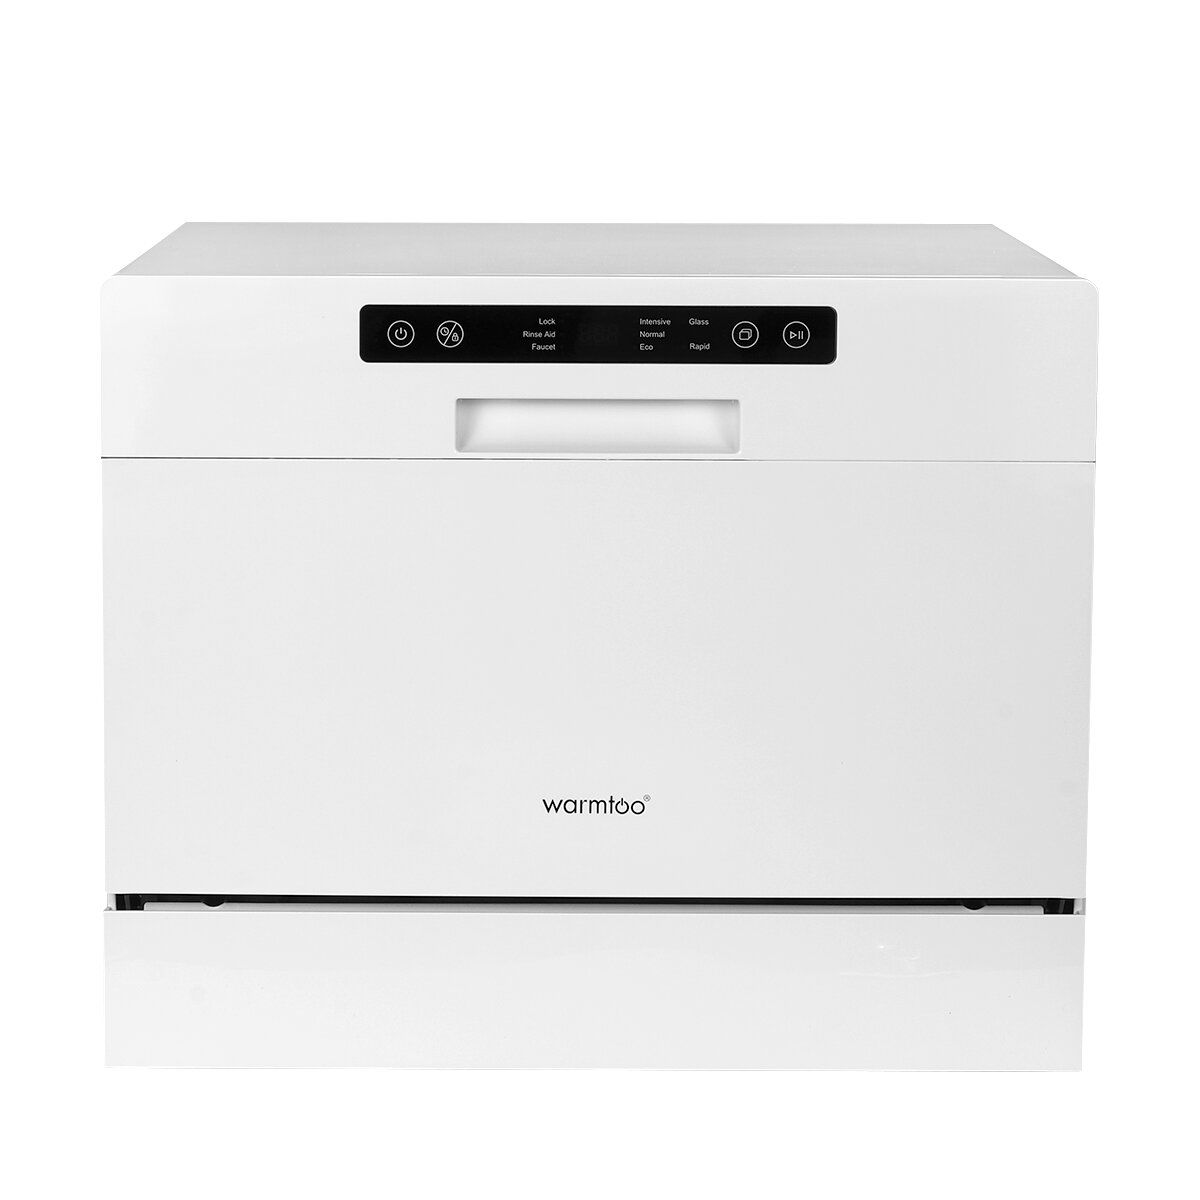 Image of Warmto 6 Piece Countertop Dishwasher Counter Top Dishwasher Machine Delay Start LED Display 5 Washing Modes